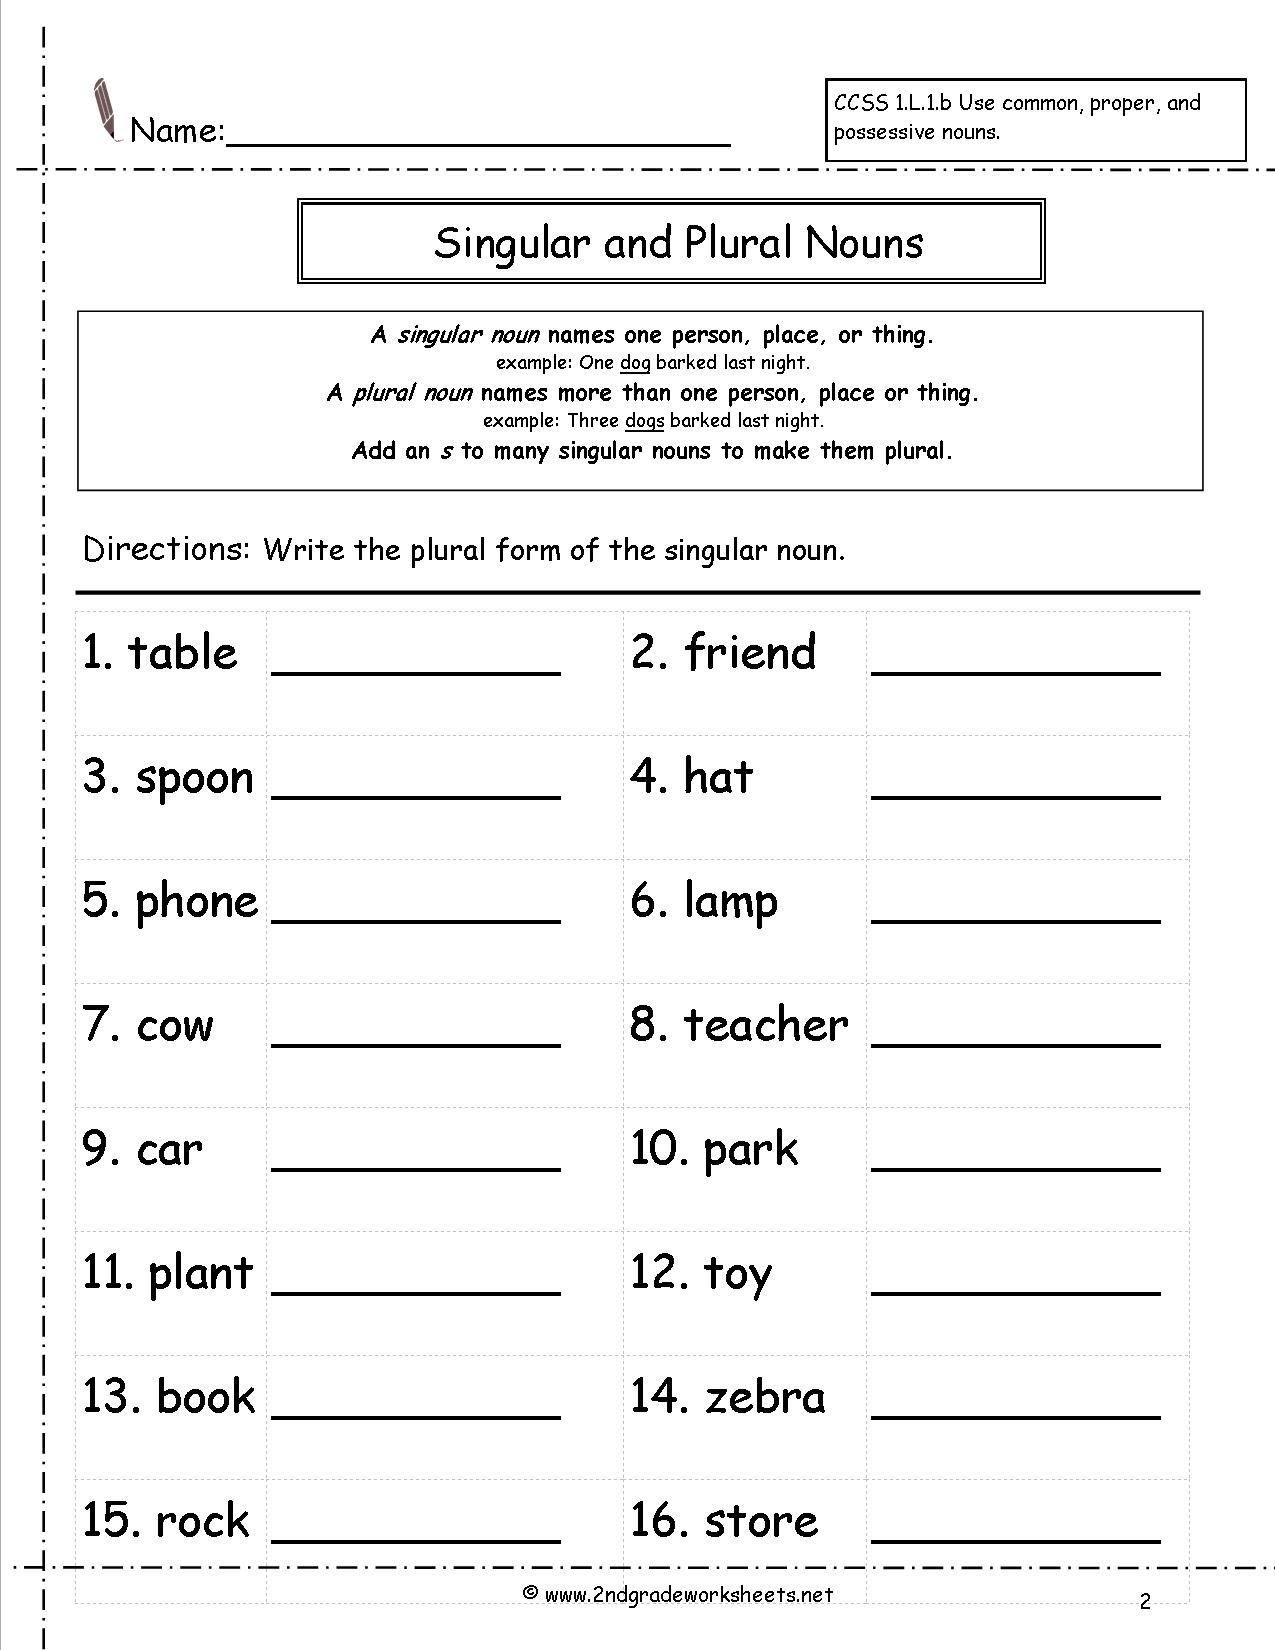 Singular Plural Nouns Worksheets Middle School